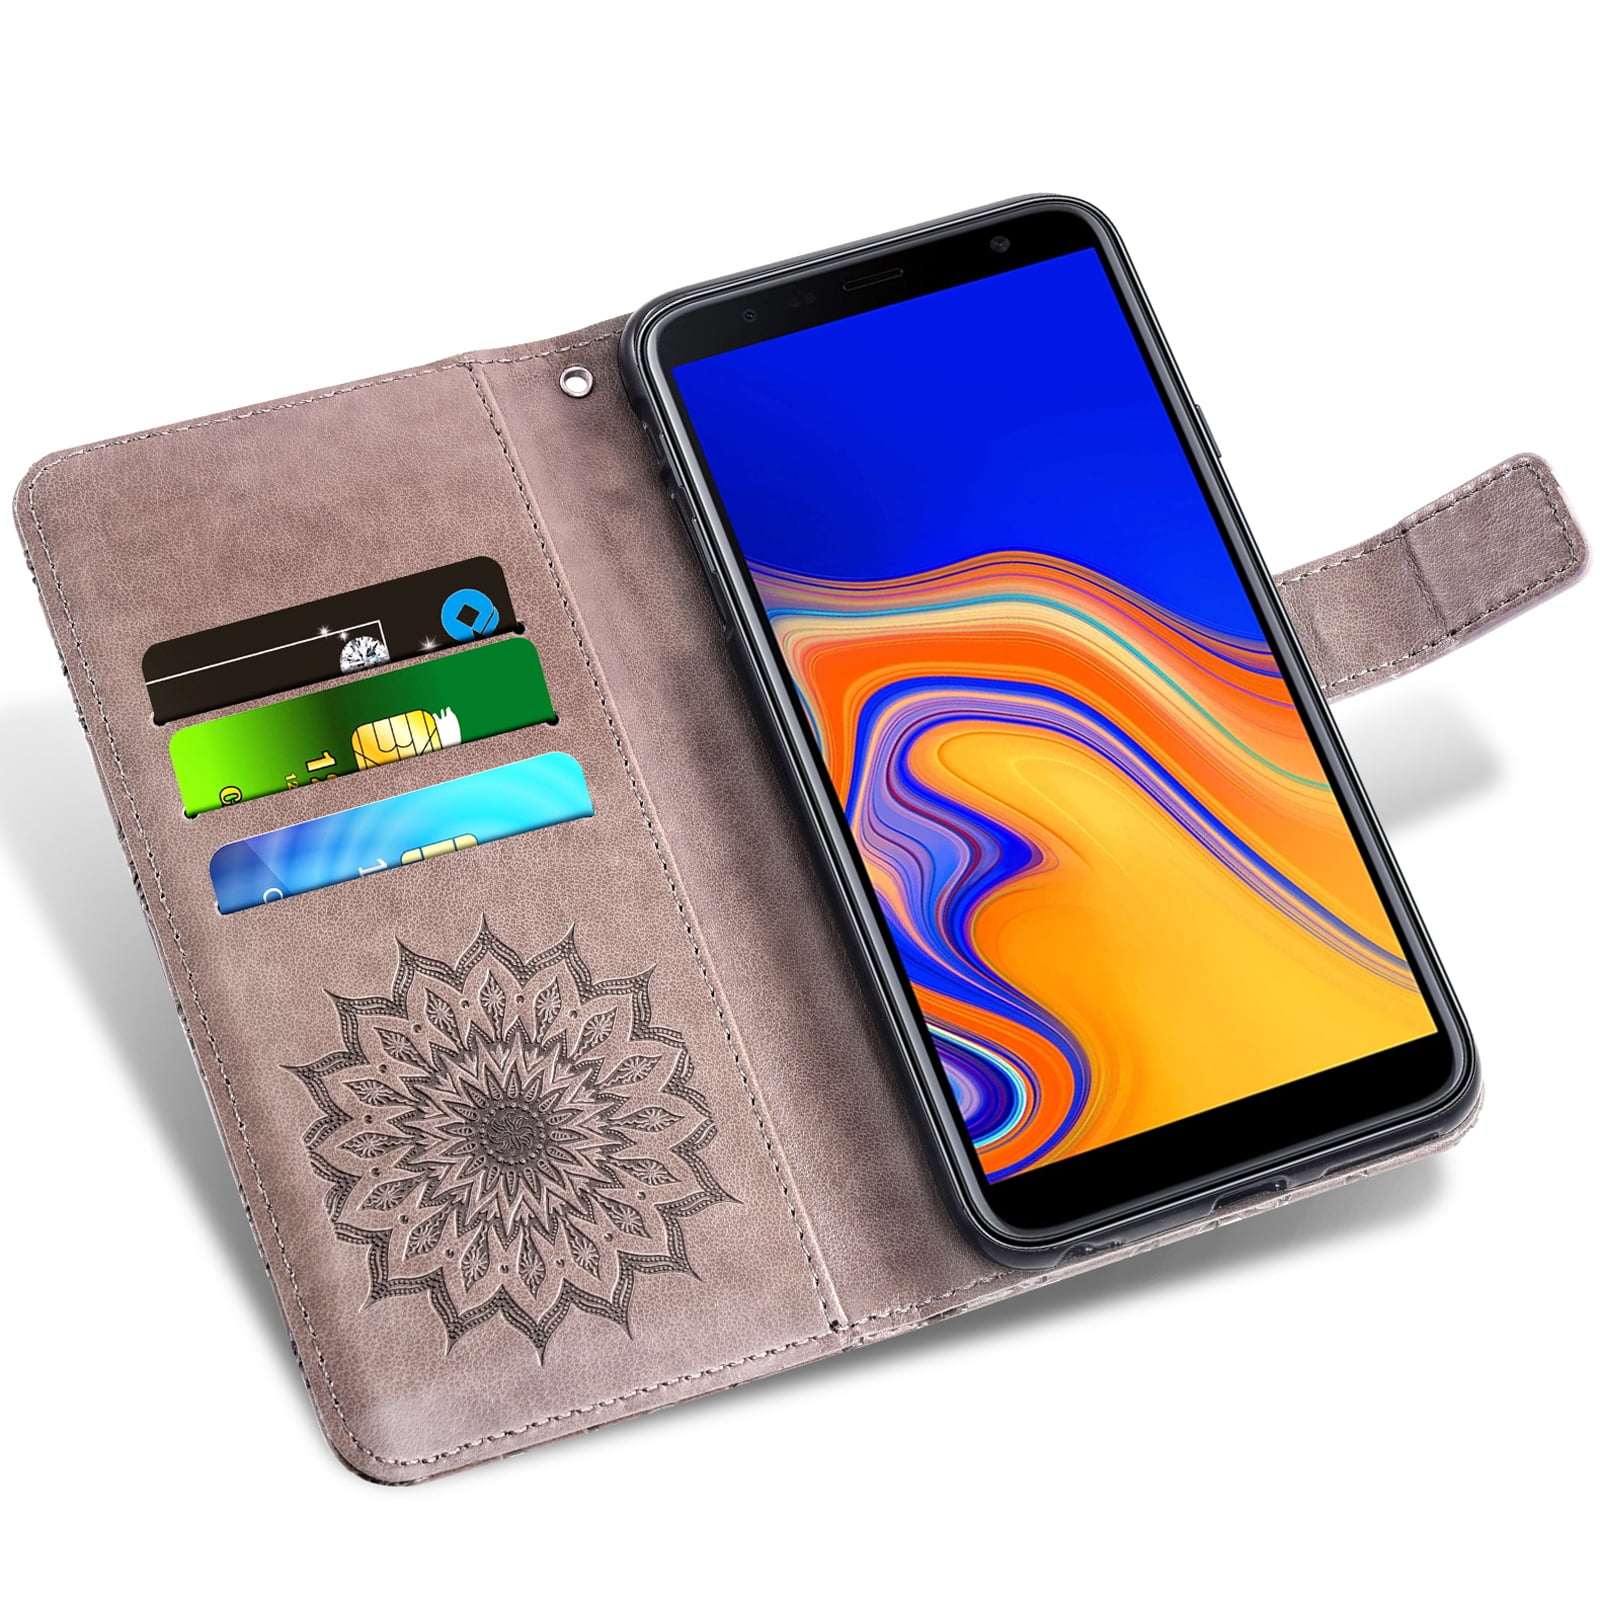 Effectief Klassiek Maori Phone Case for Samsung Galaxy J4 Plus 2018 Wallet Cases with Leather Slim  Flip Cover Card Holder Stand Accessories Women Rose Gold - Walmart.com